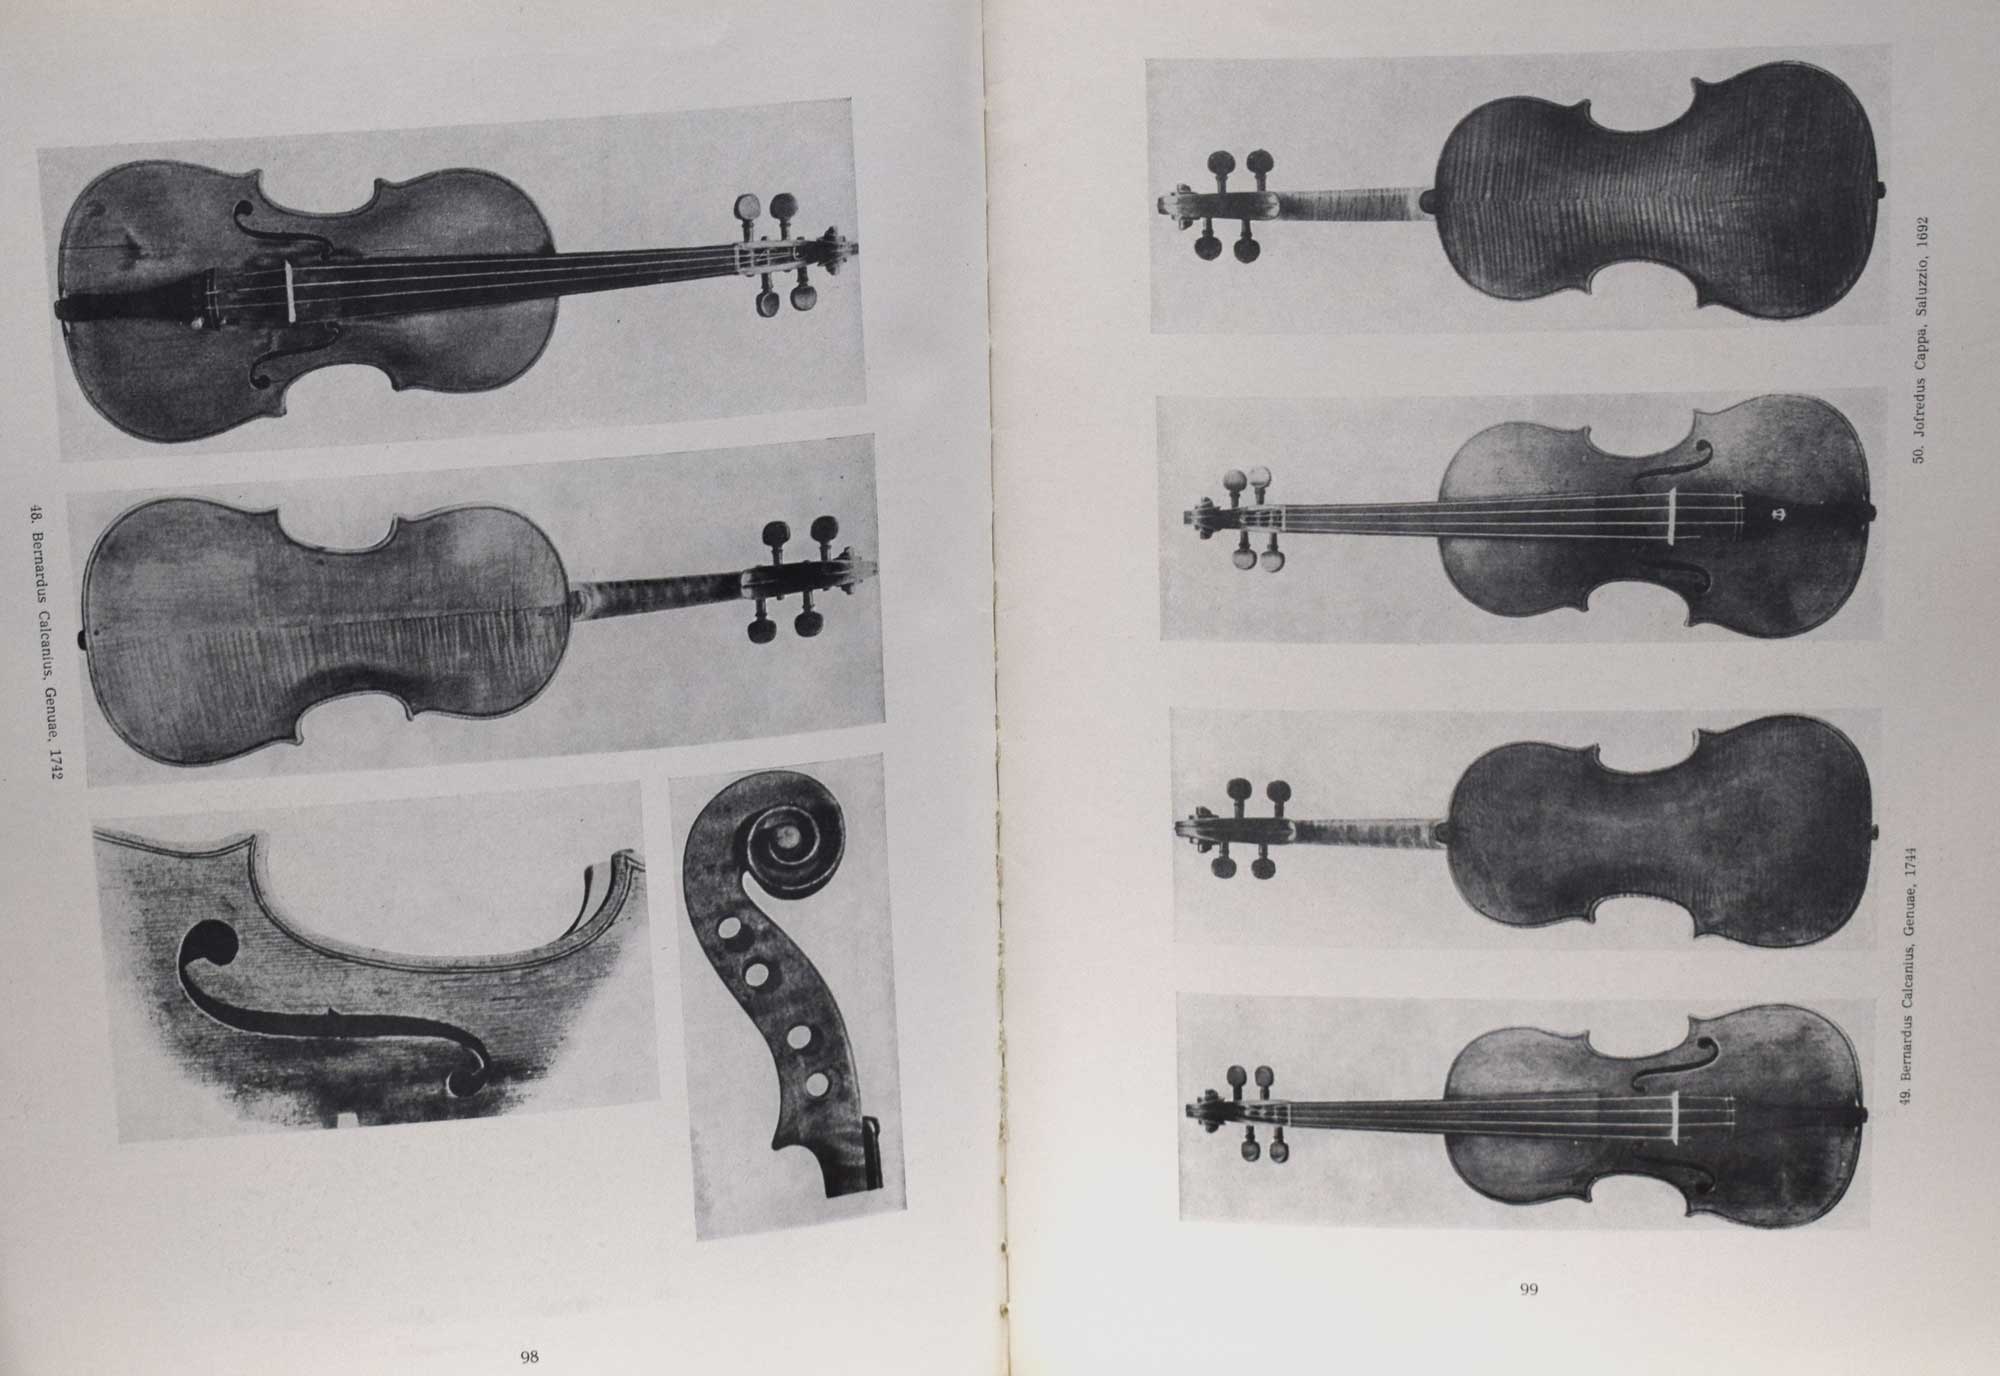 Italian Violin Makers